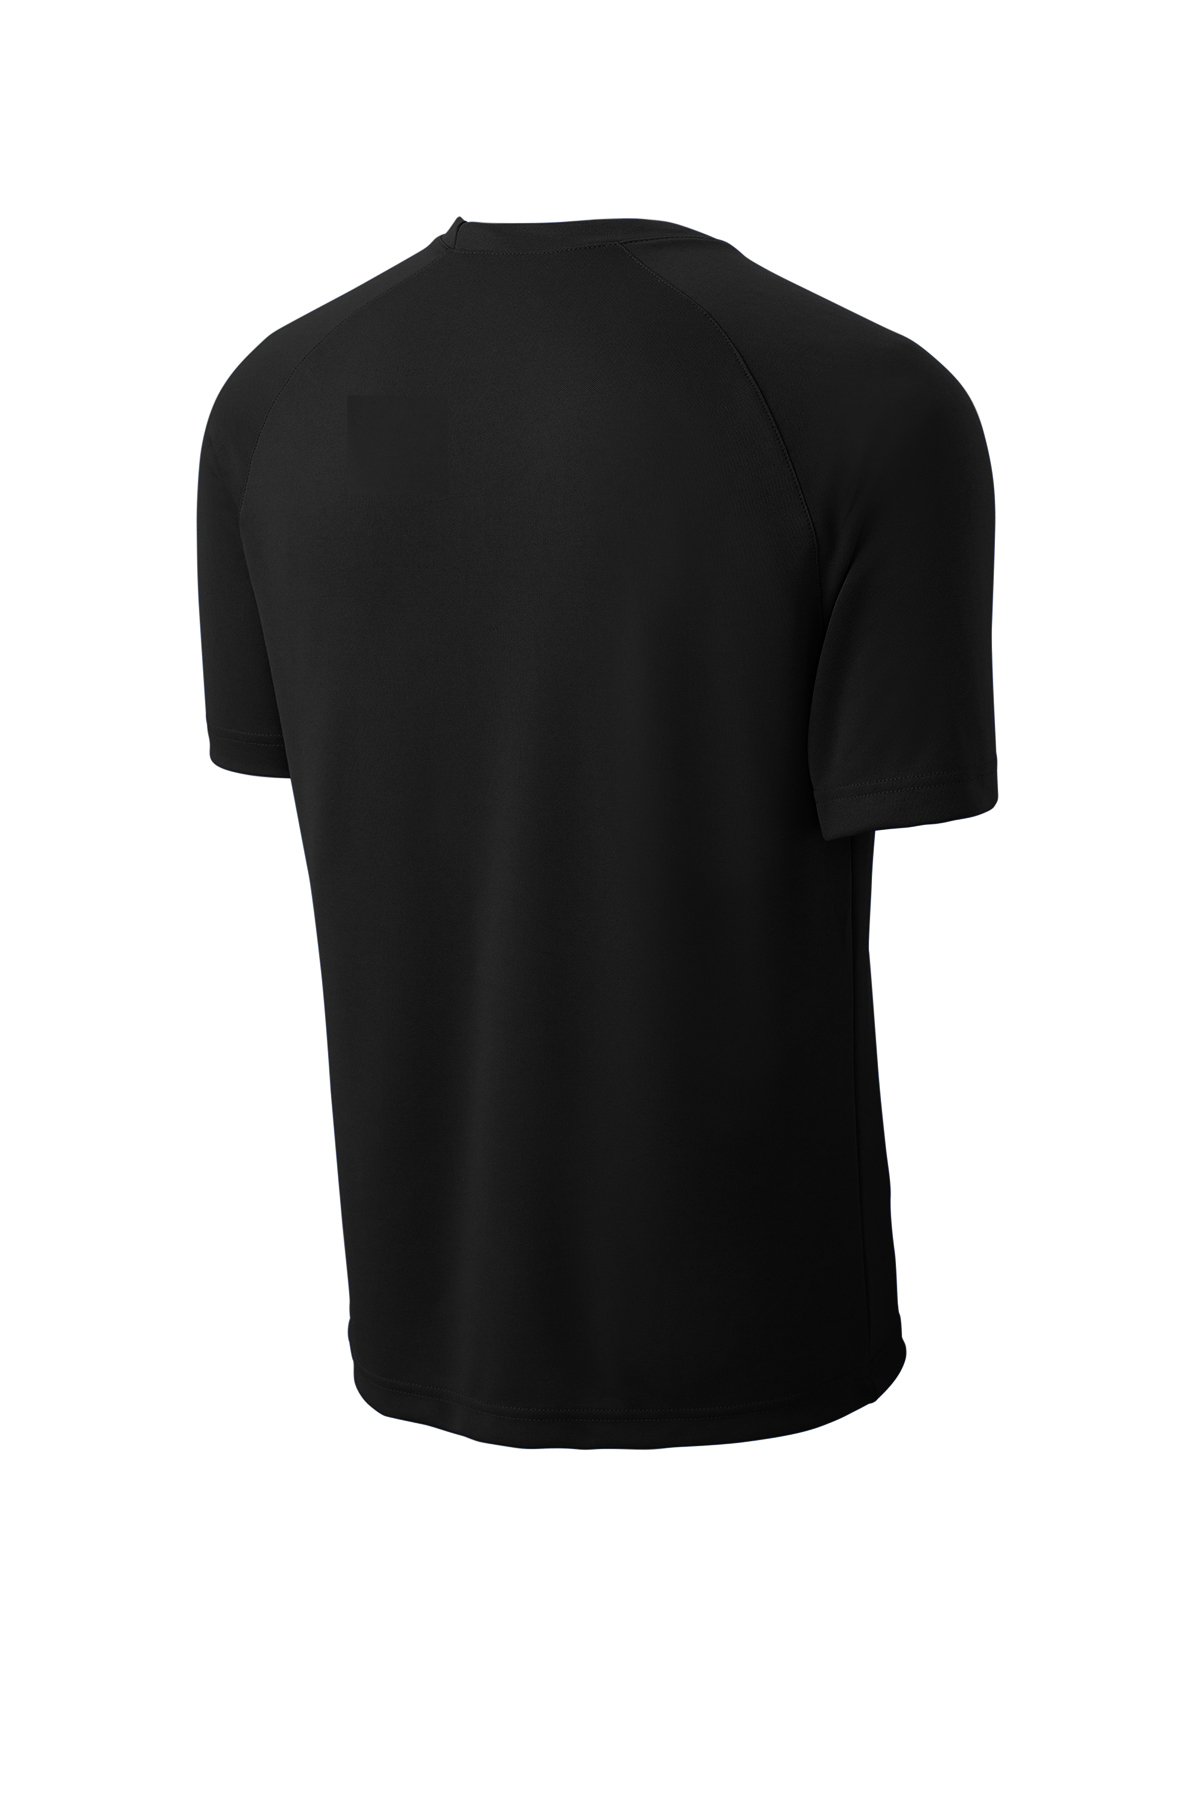 Sport-Tek Dry Zone Short Sleeve Raglan T-Shirt | Product | Sport-Tek